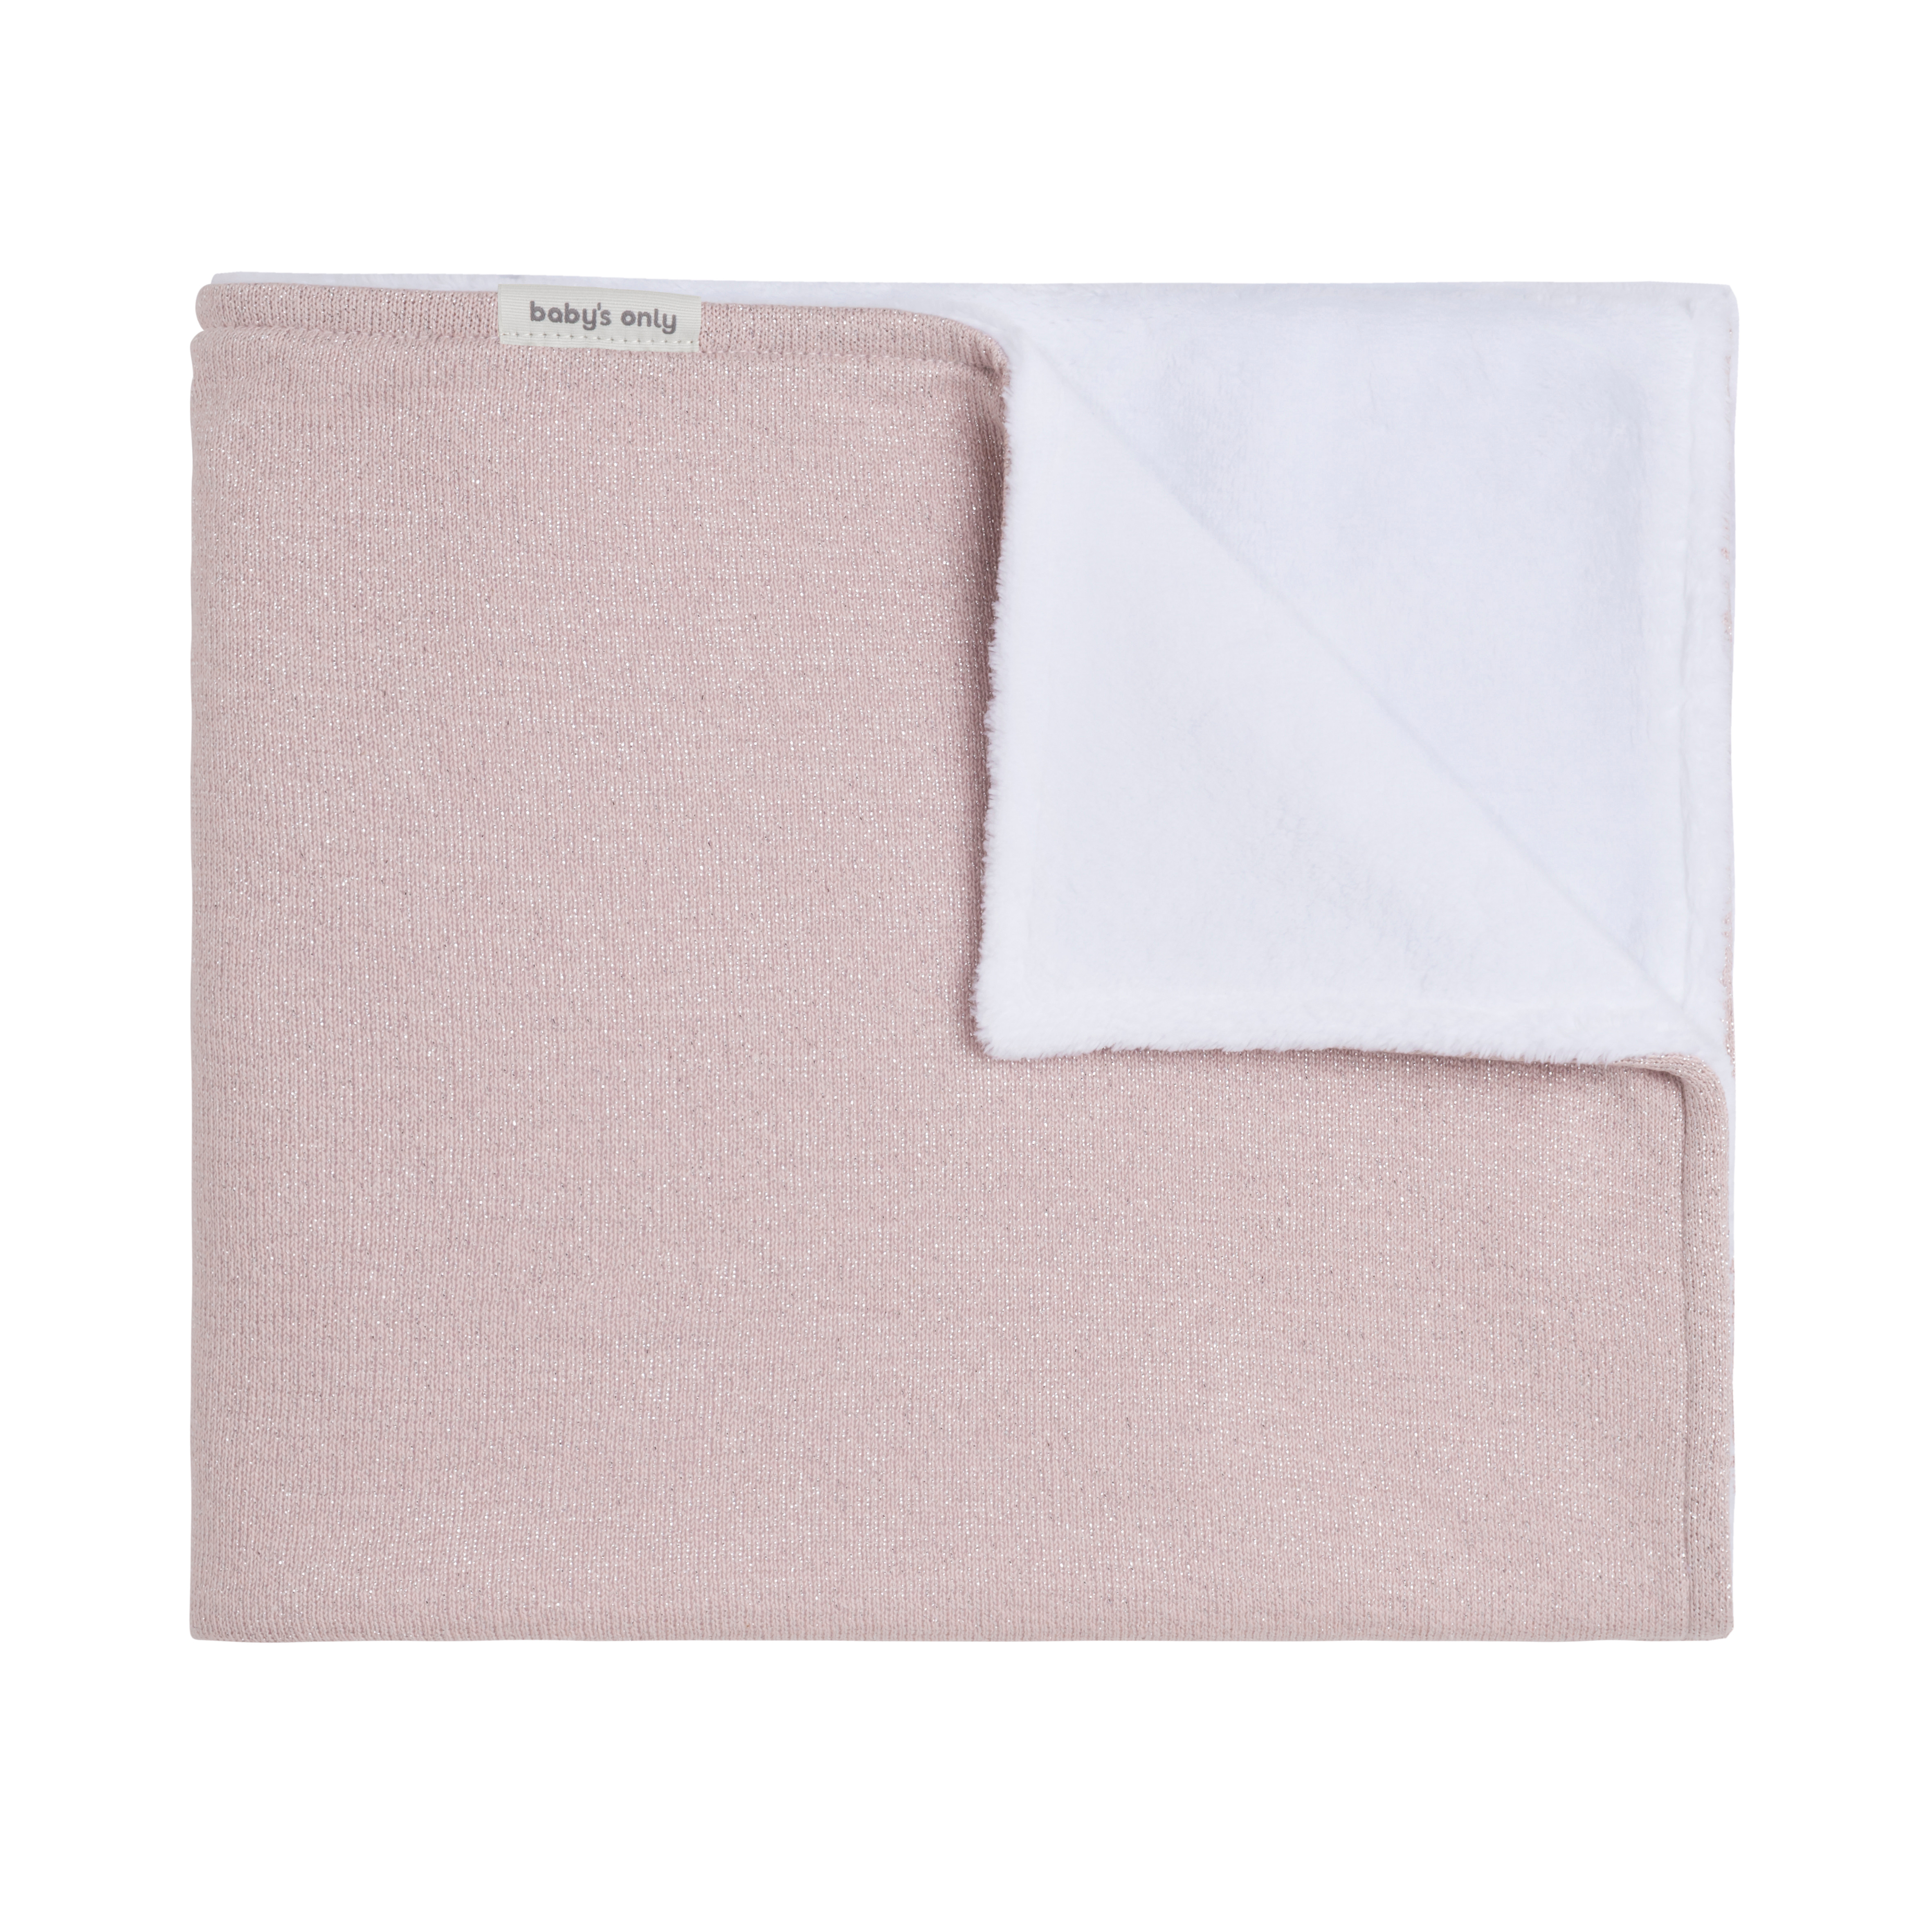 Cot blanket teddy Sparkle silver-pink melee